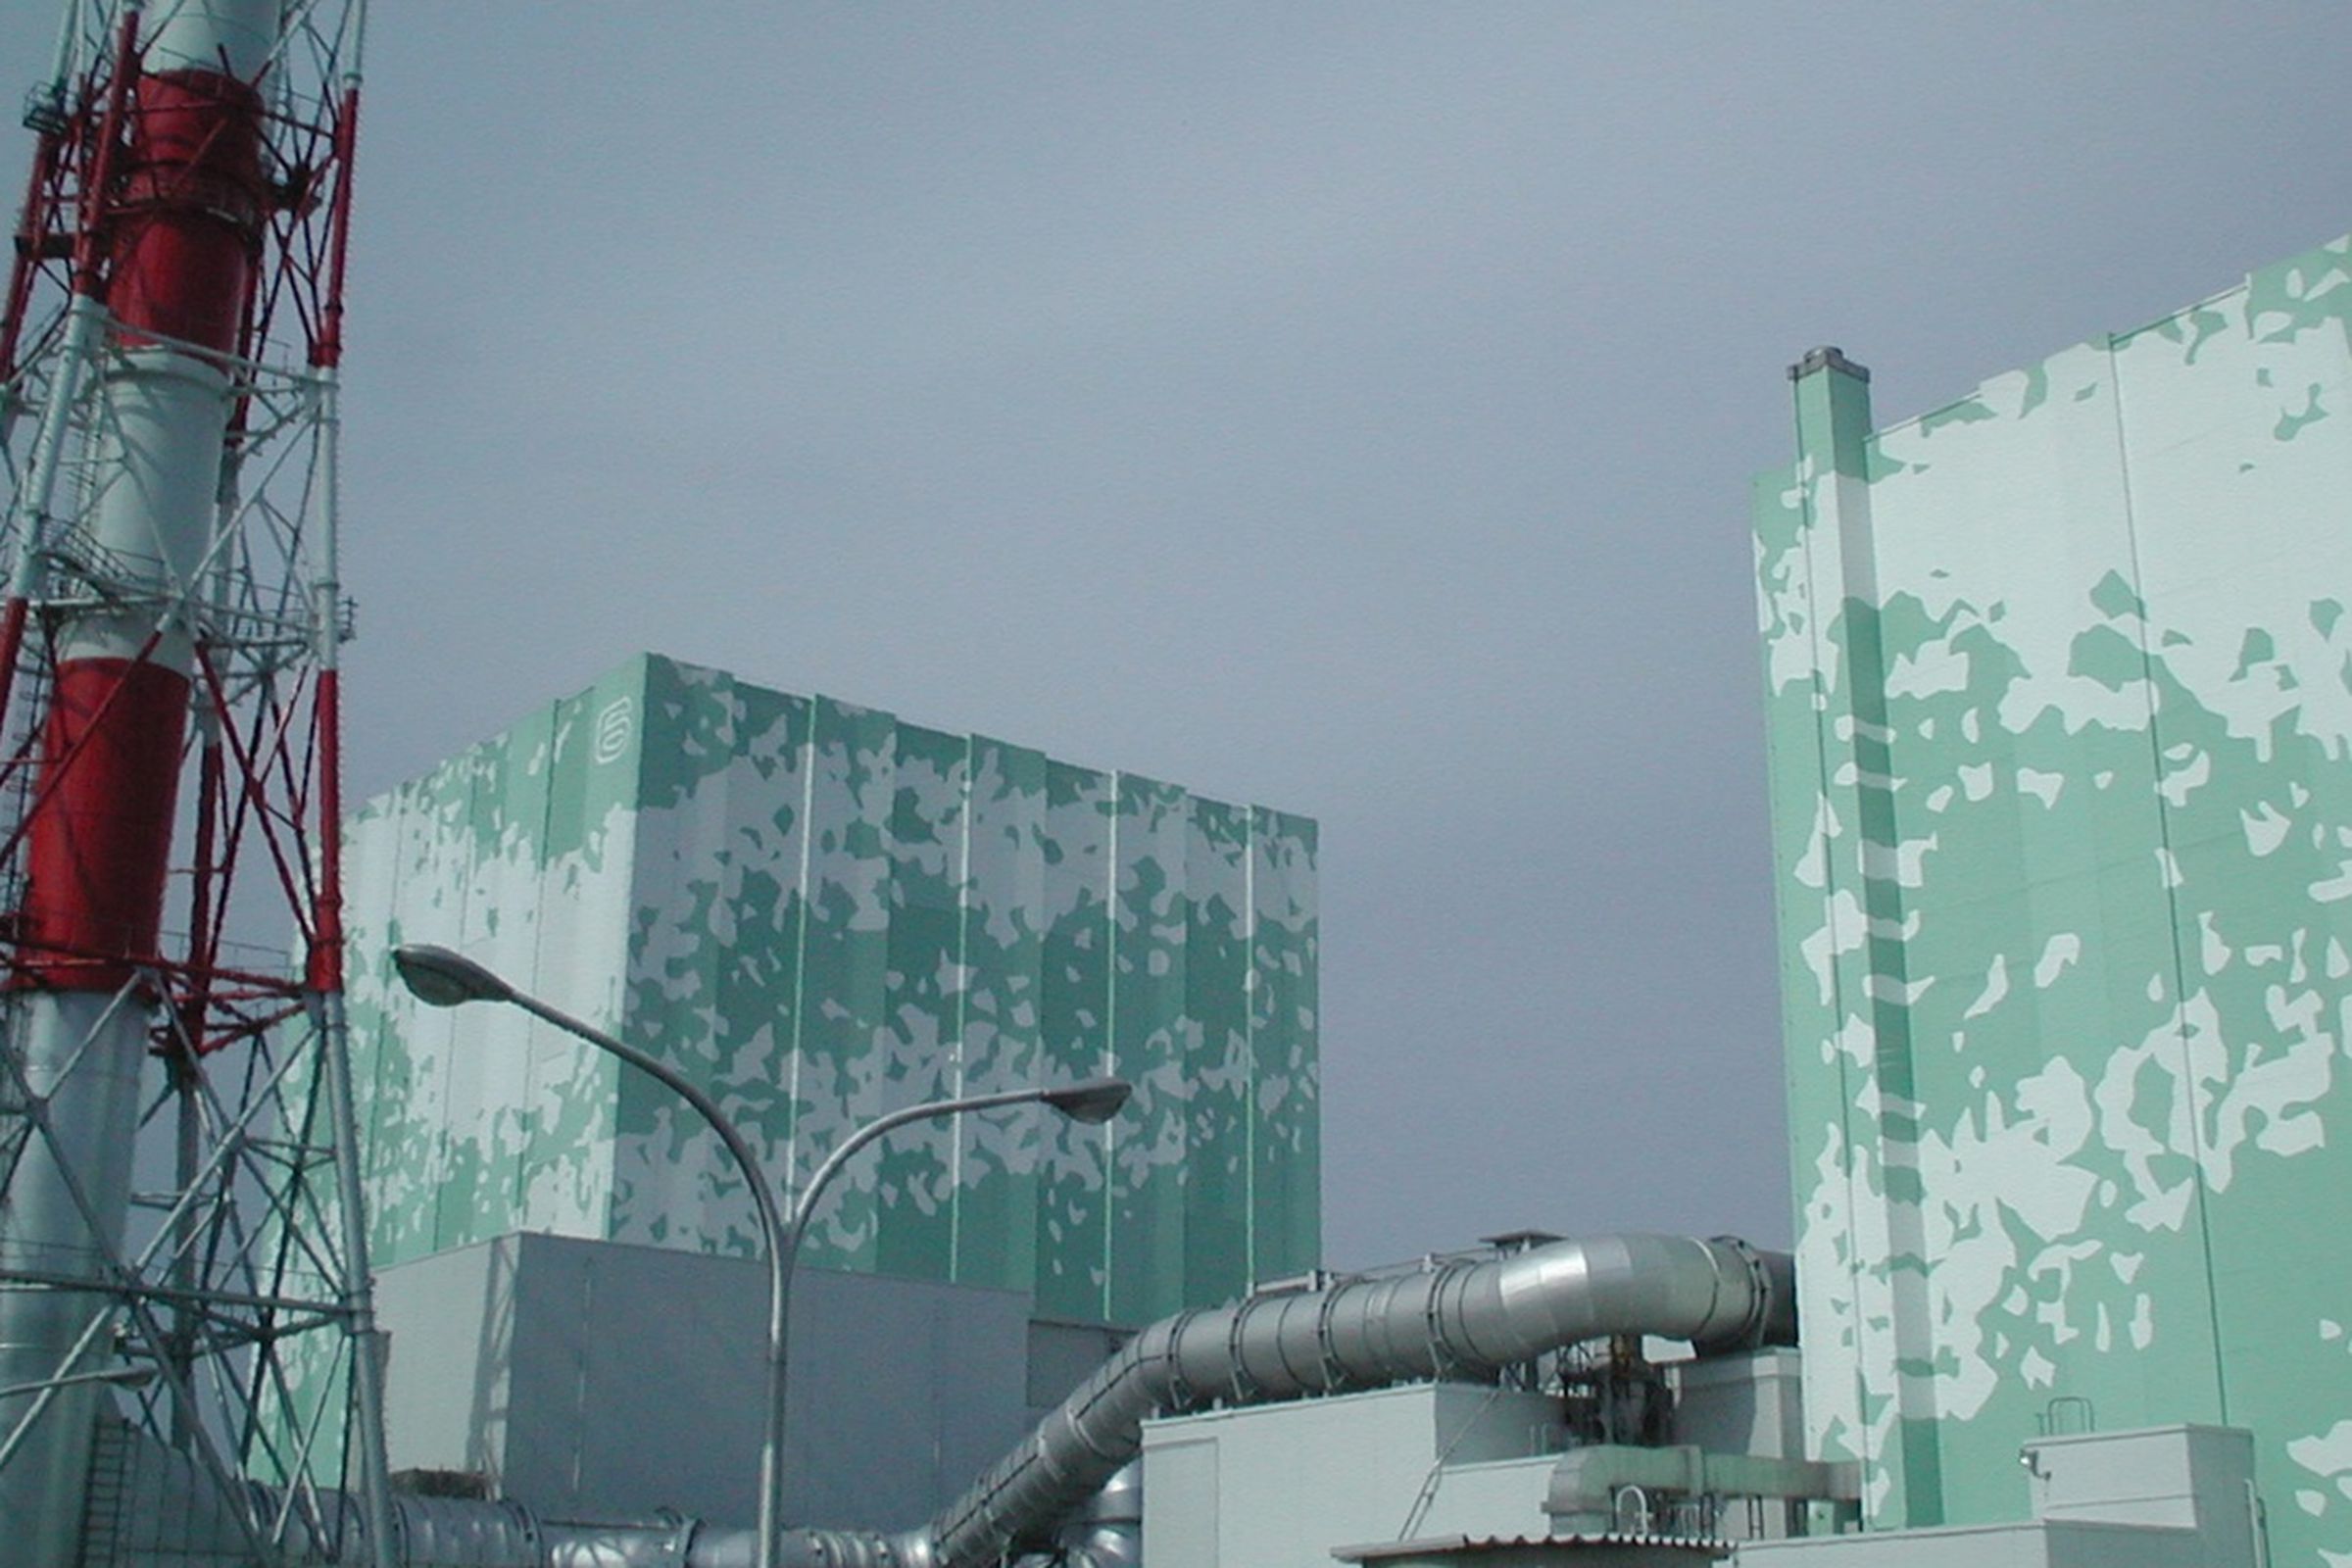 fukushima daiichi power plant (takuo kawamoto flickr)